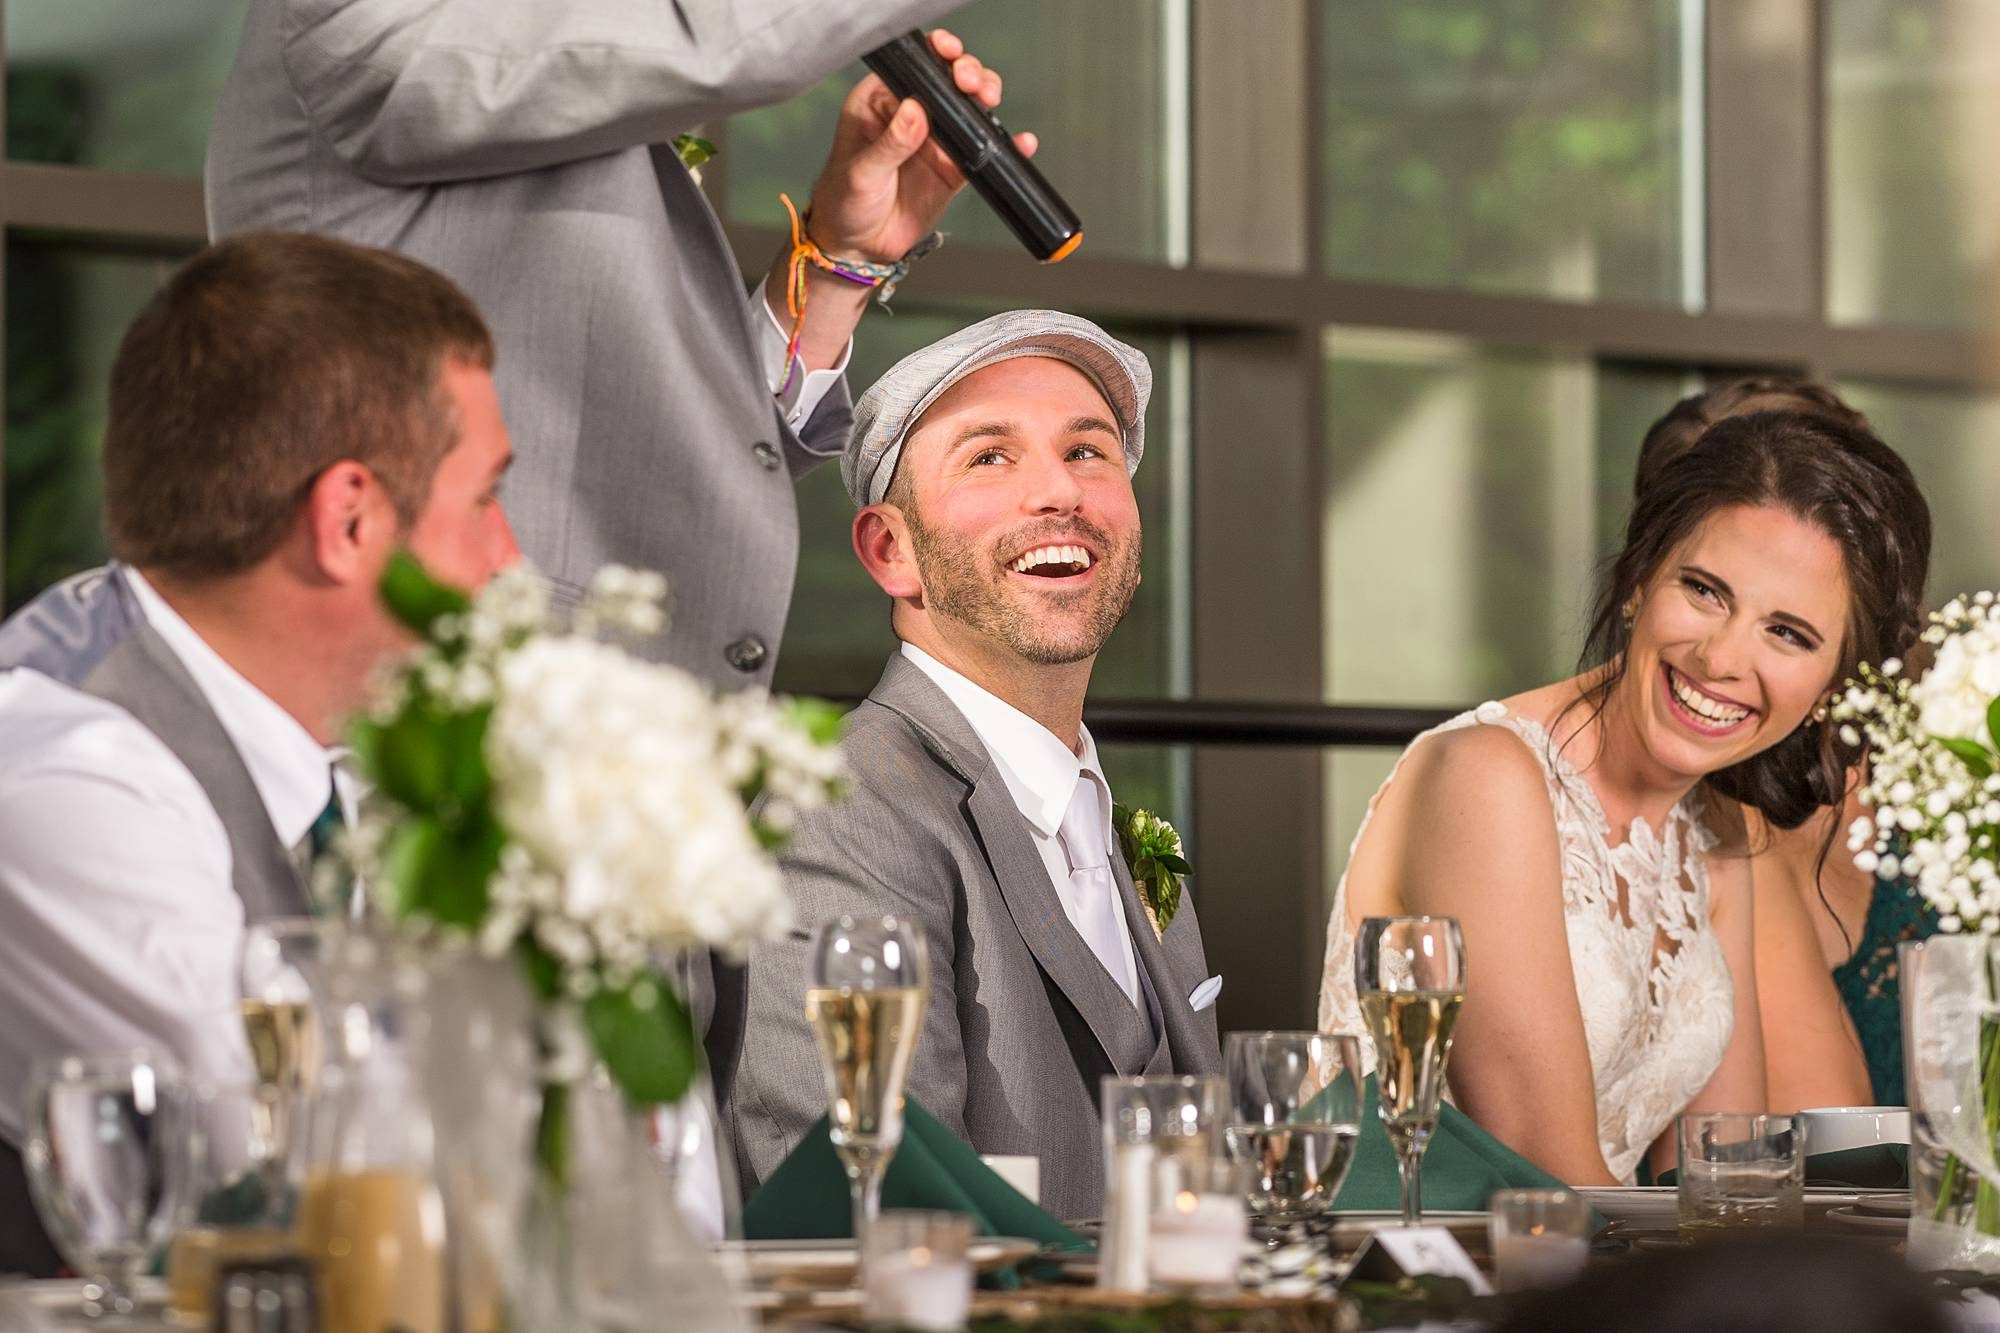 Kellogg Center wedding reception photographs